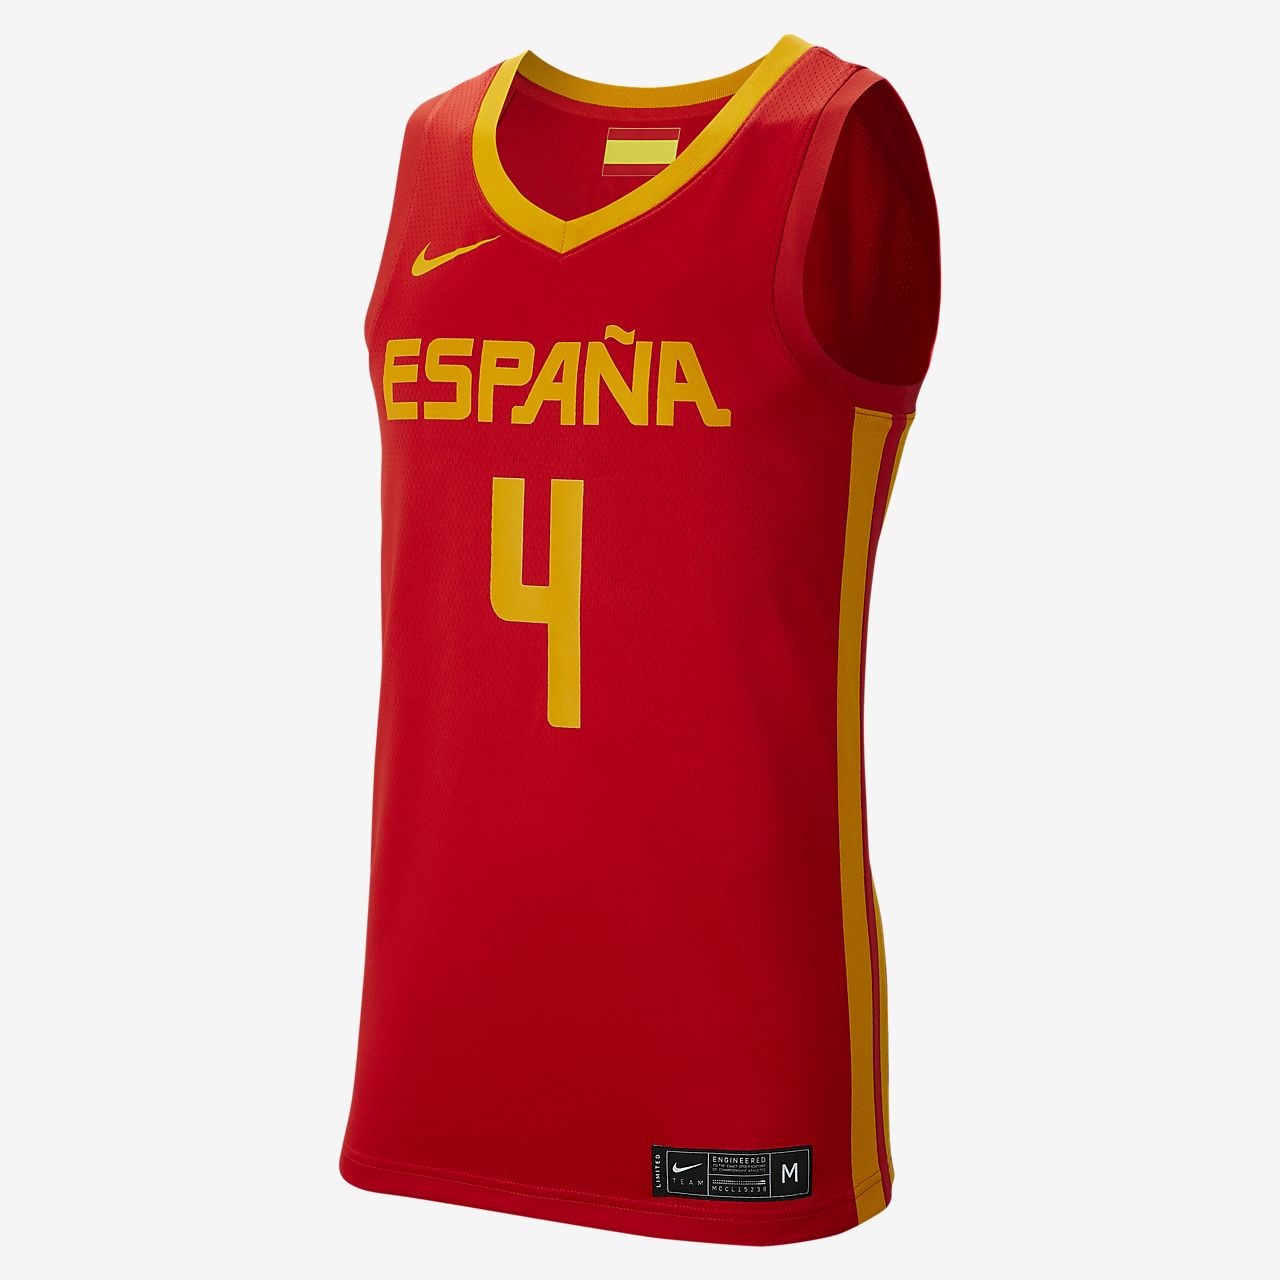 espana basketball jersey